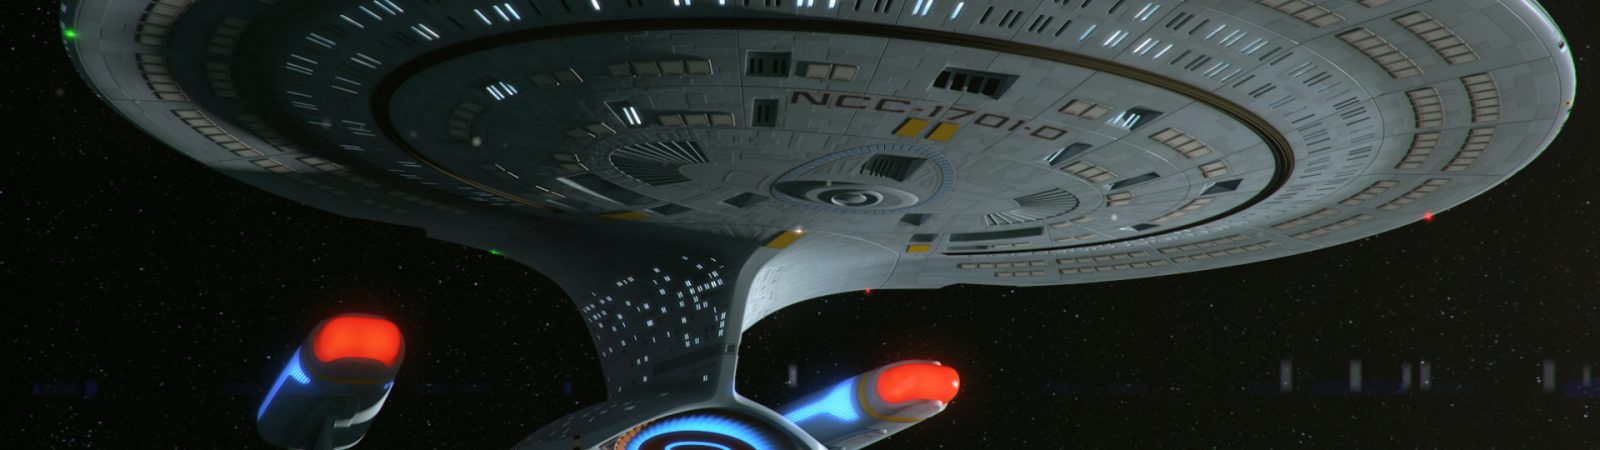 Enterprise (2009 Reboot) WIPs